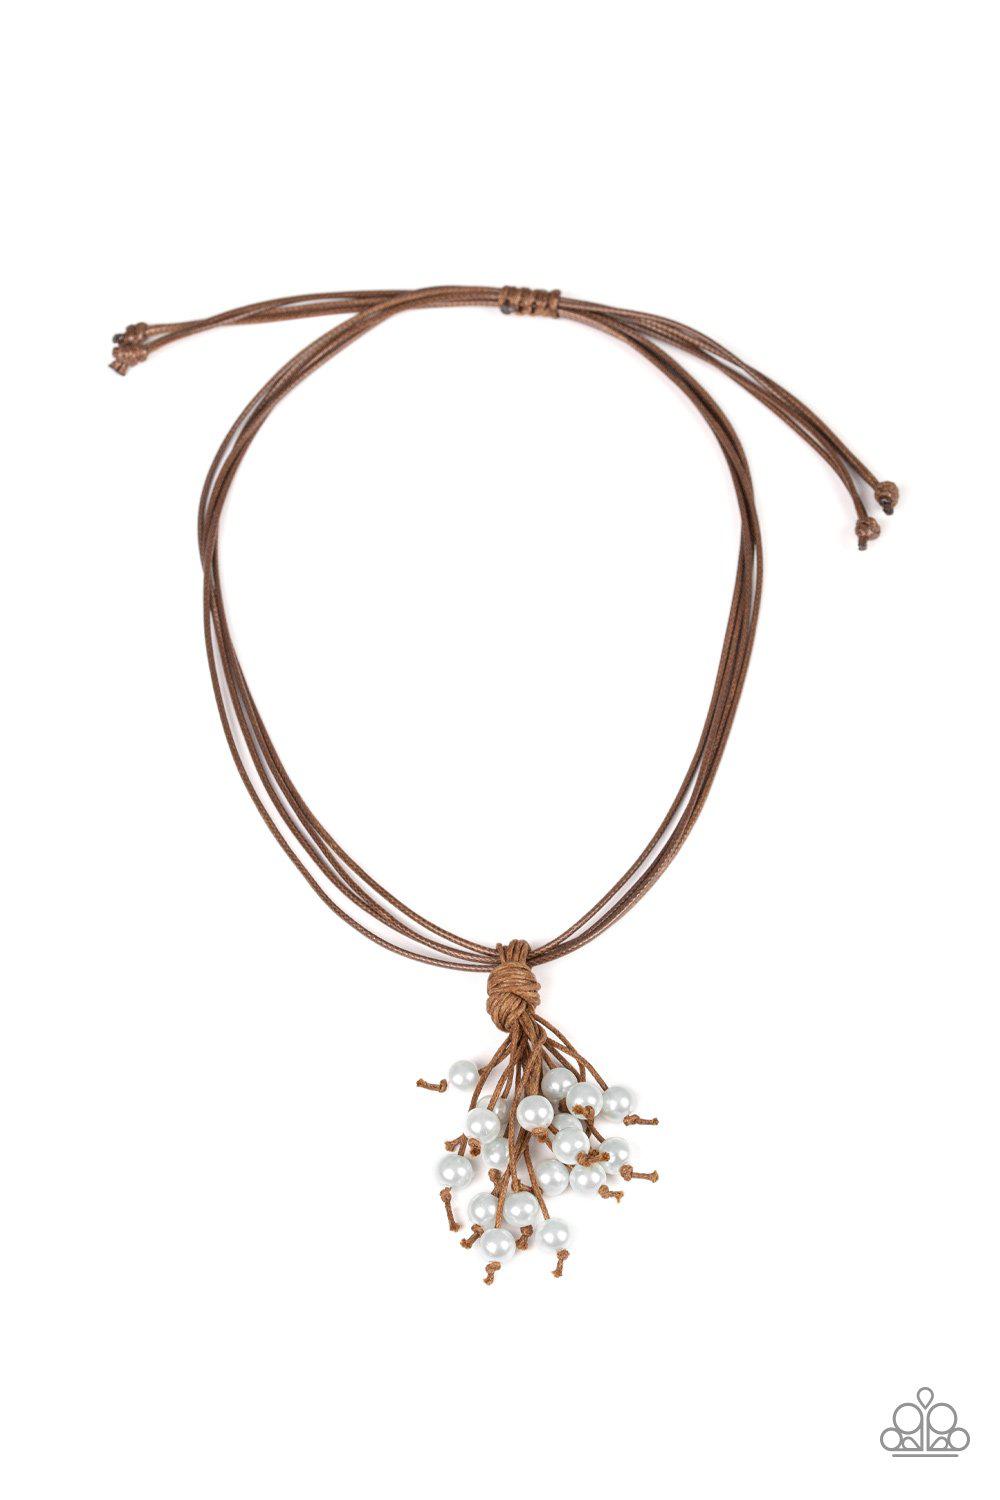 Tassel Trek White Pearl Urban Necklace - Paparazzi Accessories - lightbox -CarasShop.com - $5 Jewelry by Cara Jewels